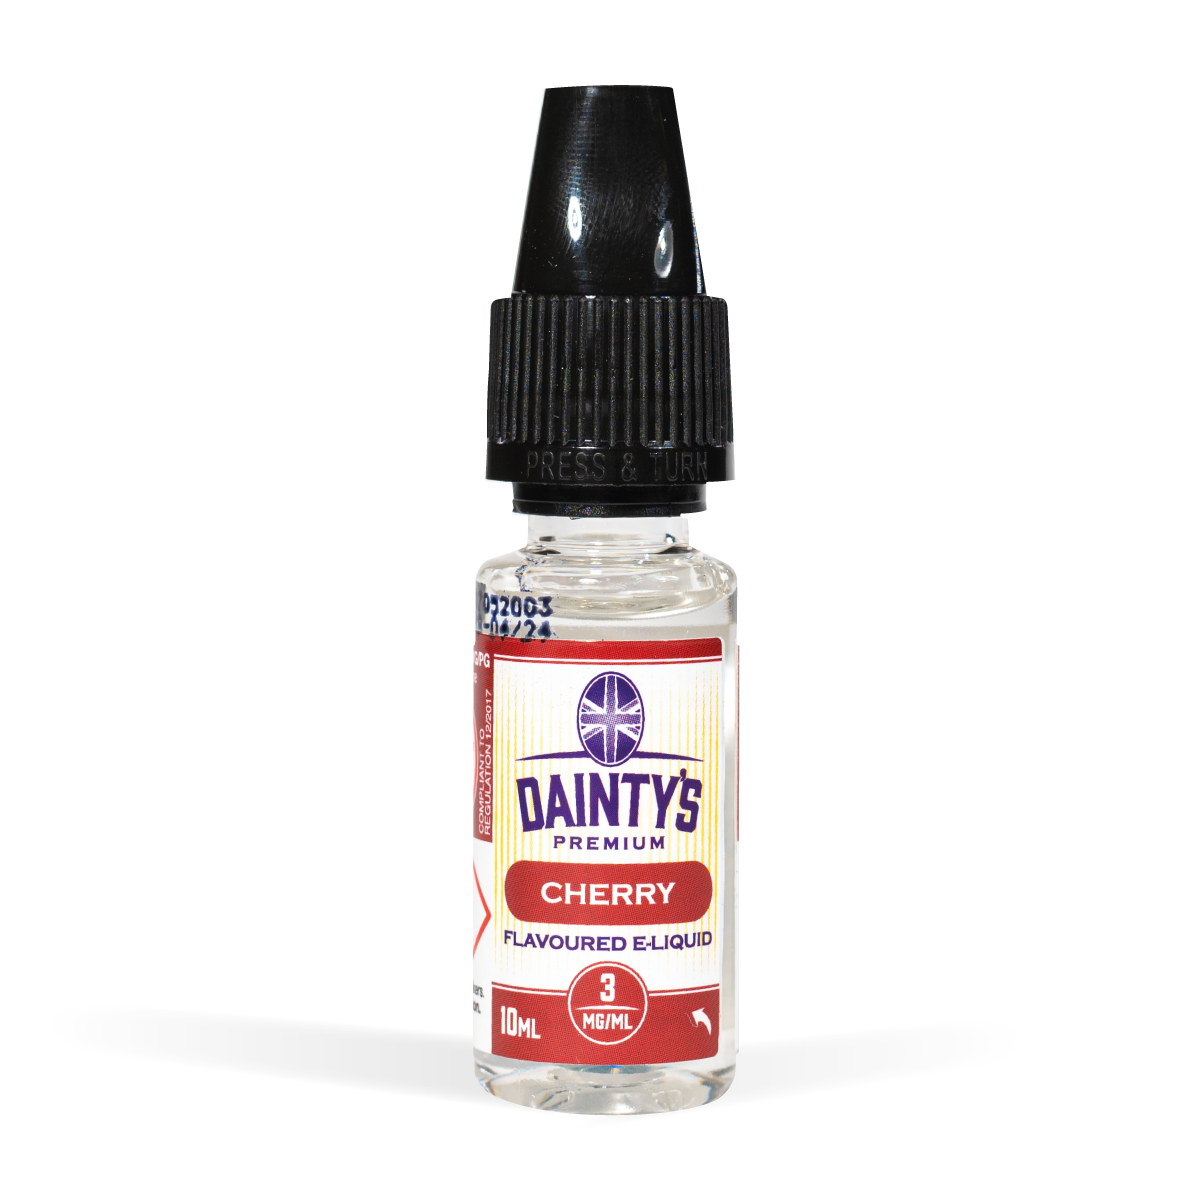 Daintys cherry e-liquid 10ml on white background